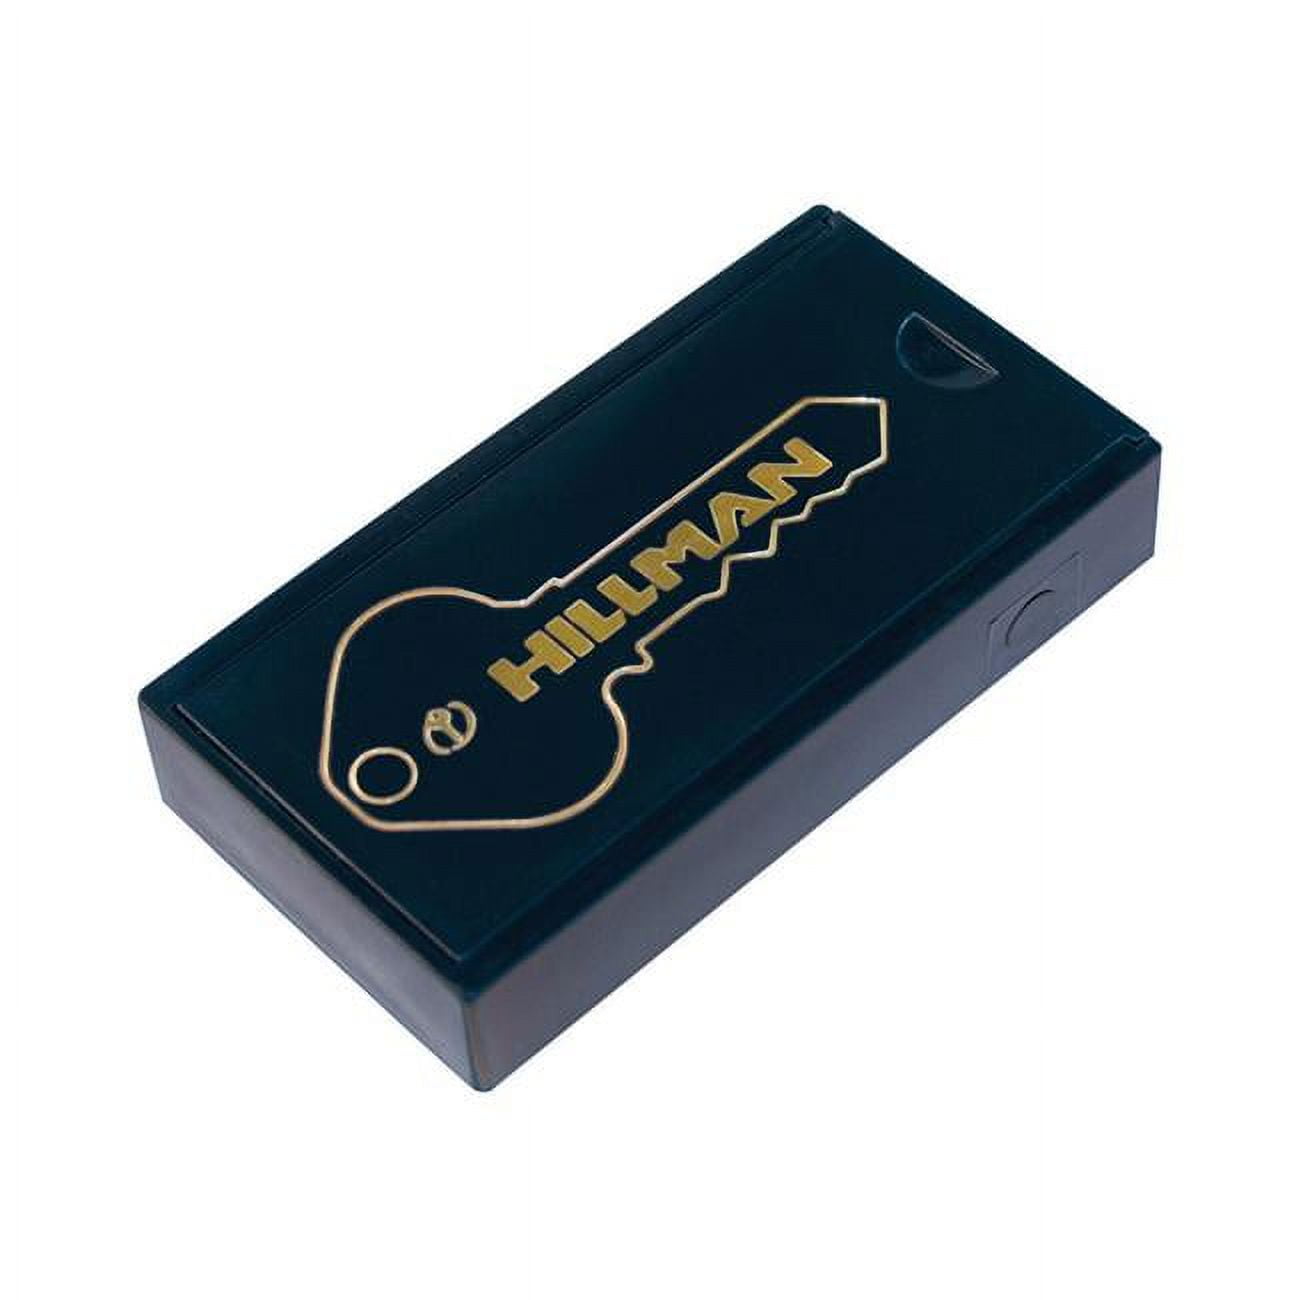 Picture of Hillman 5936133 Plastic & Metal Magnetic Box Key Hider, Black